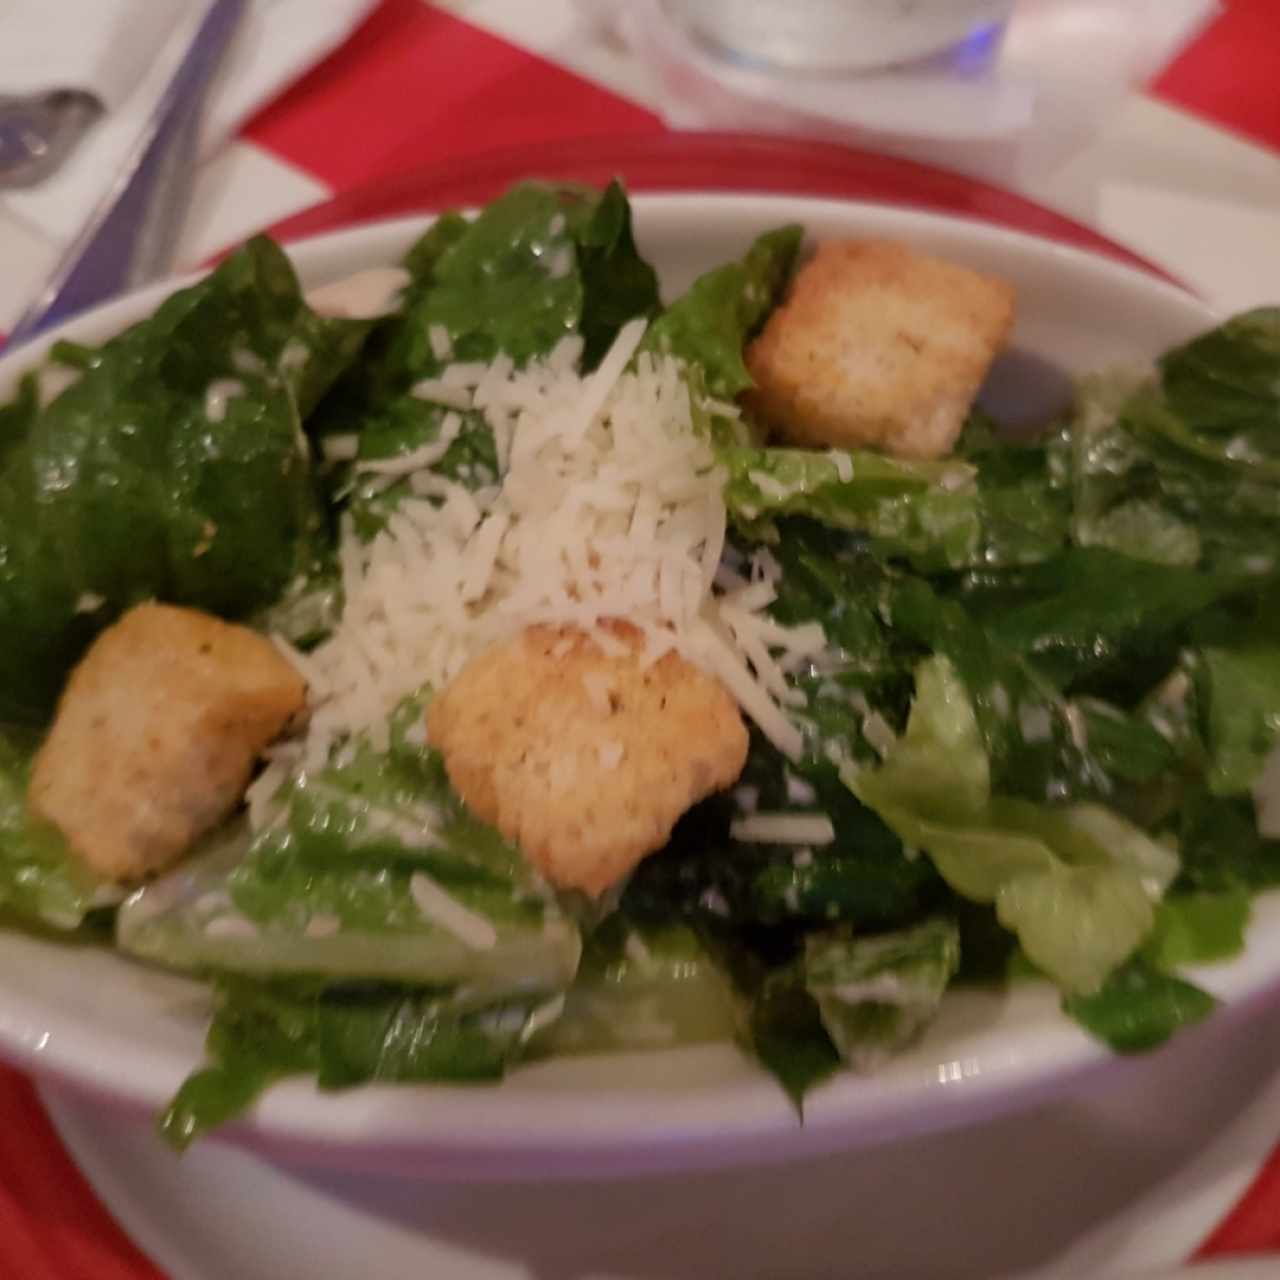 cesar salad